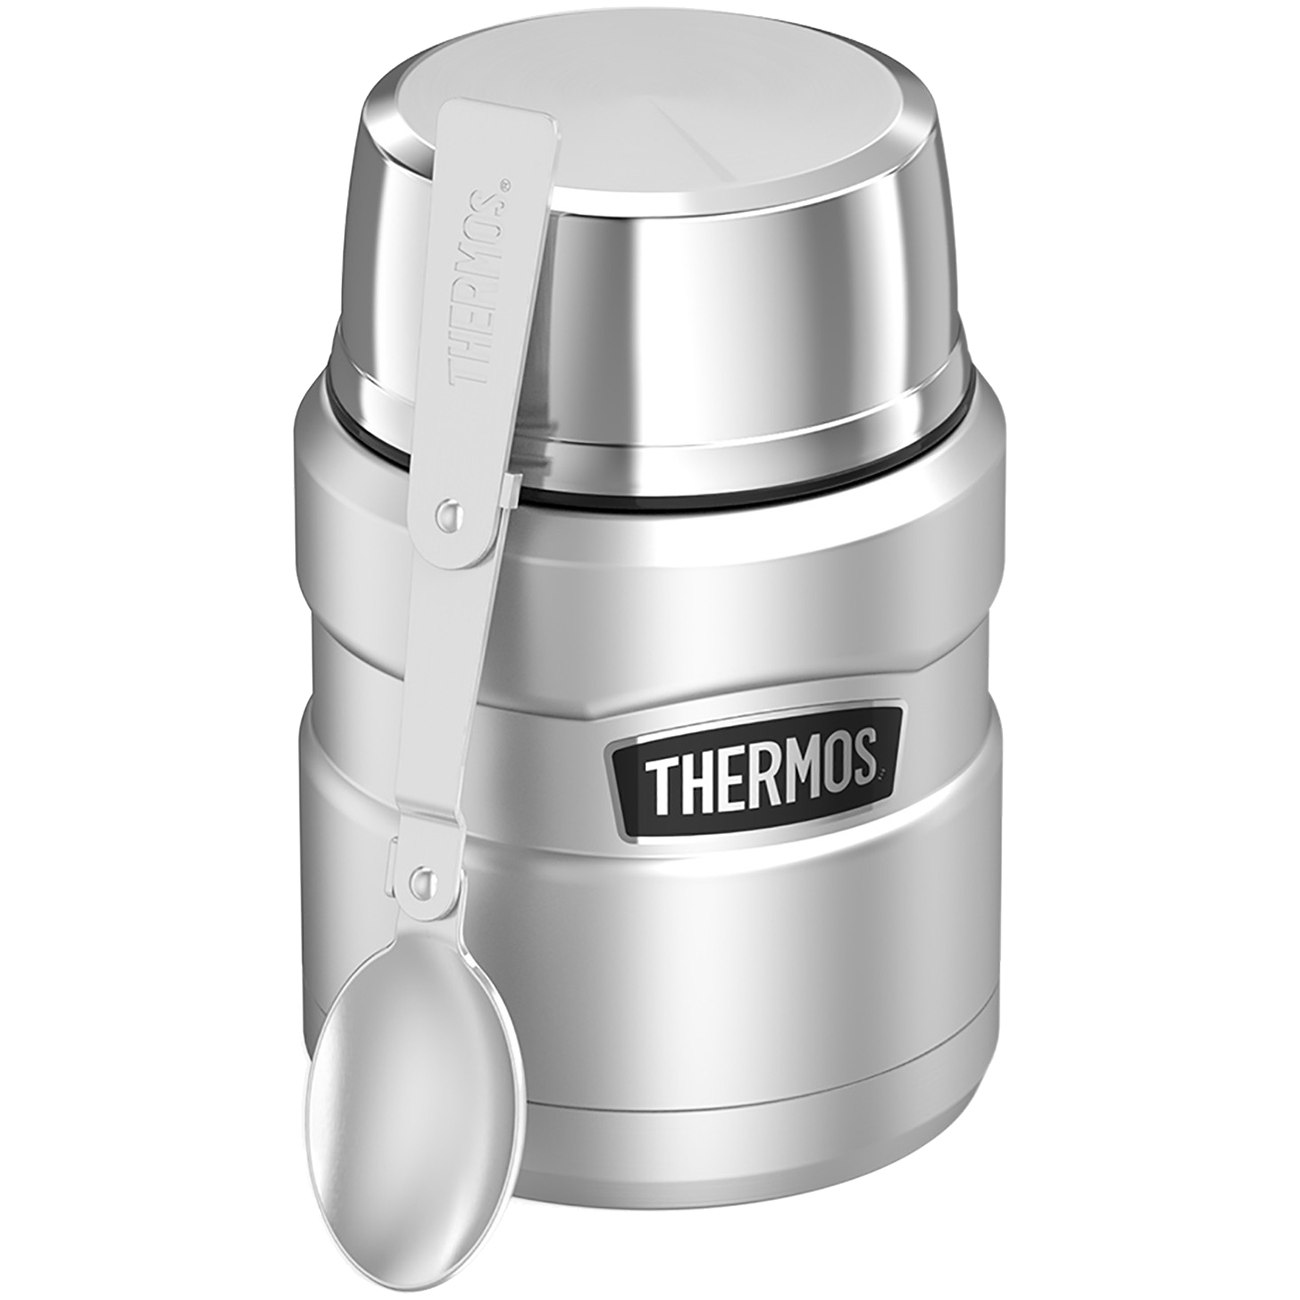 Immagine prodotto da THERMOS® Stainless King Food Jar 0.47L Contenitore Termico per Alimenti - stainless steel matt